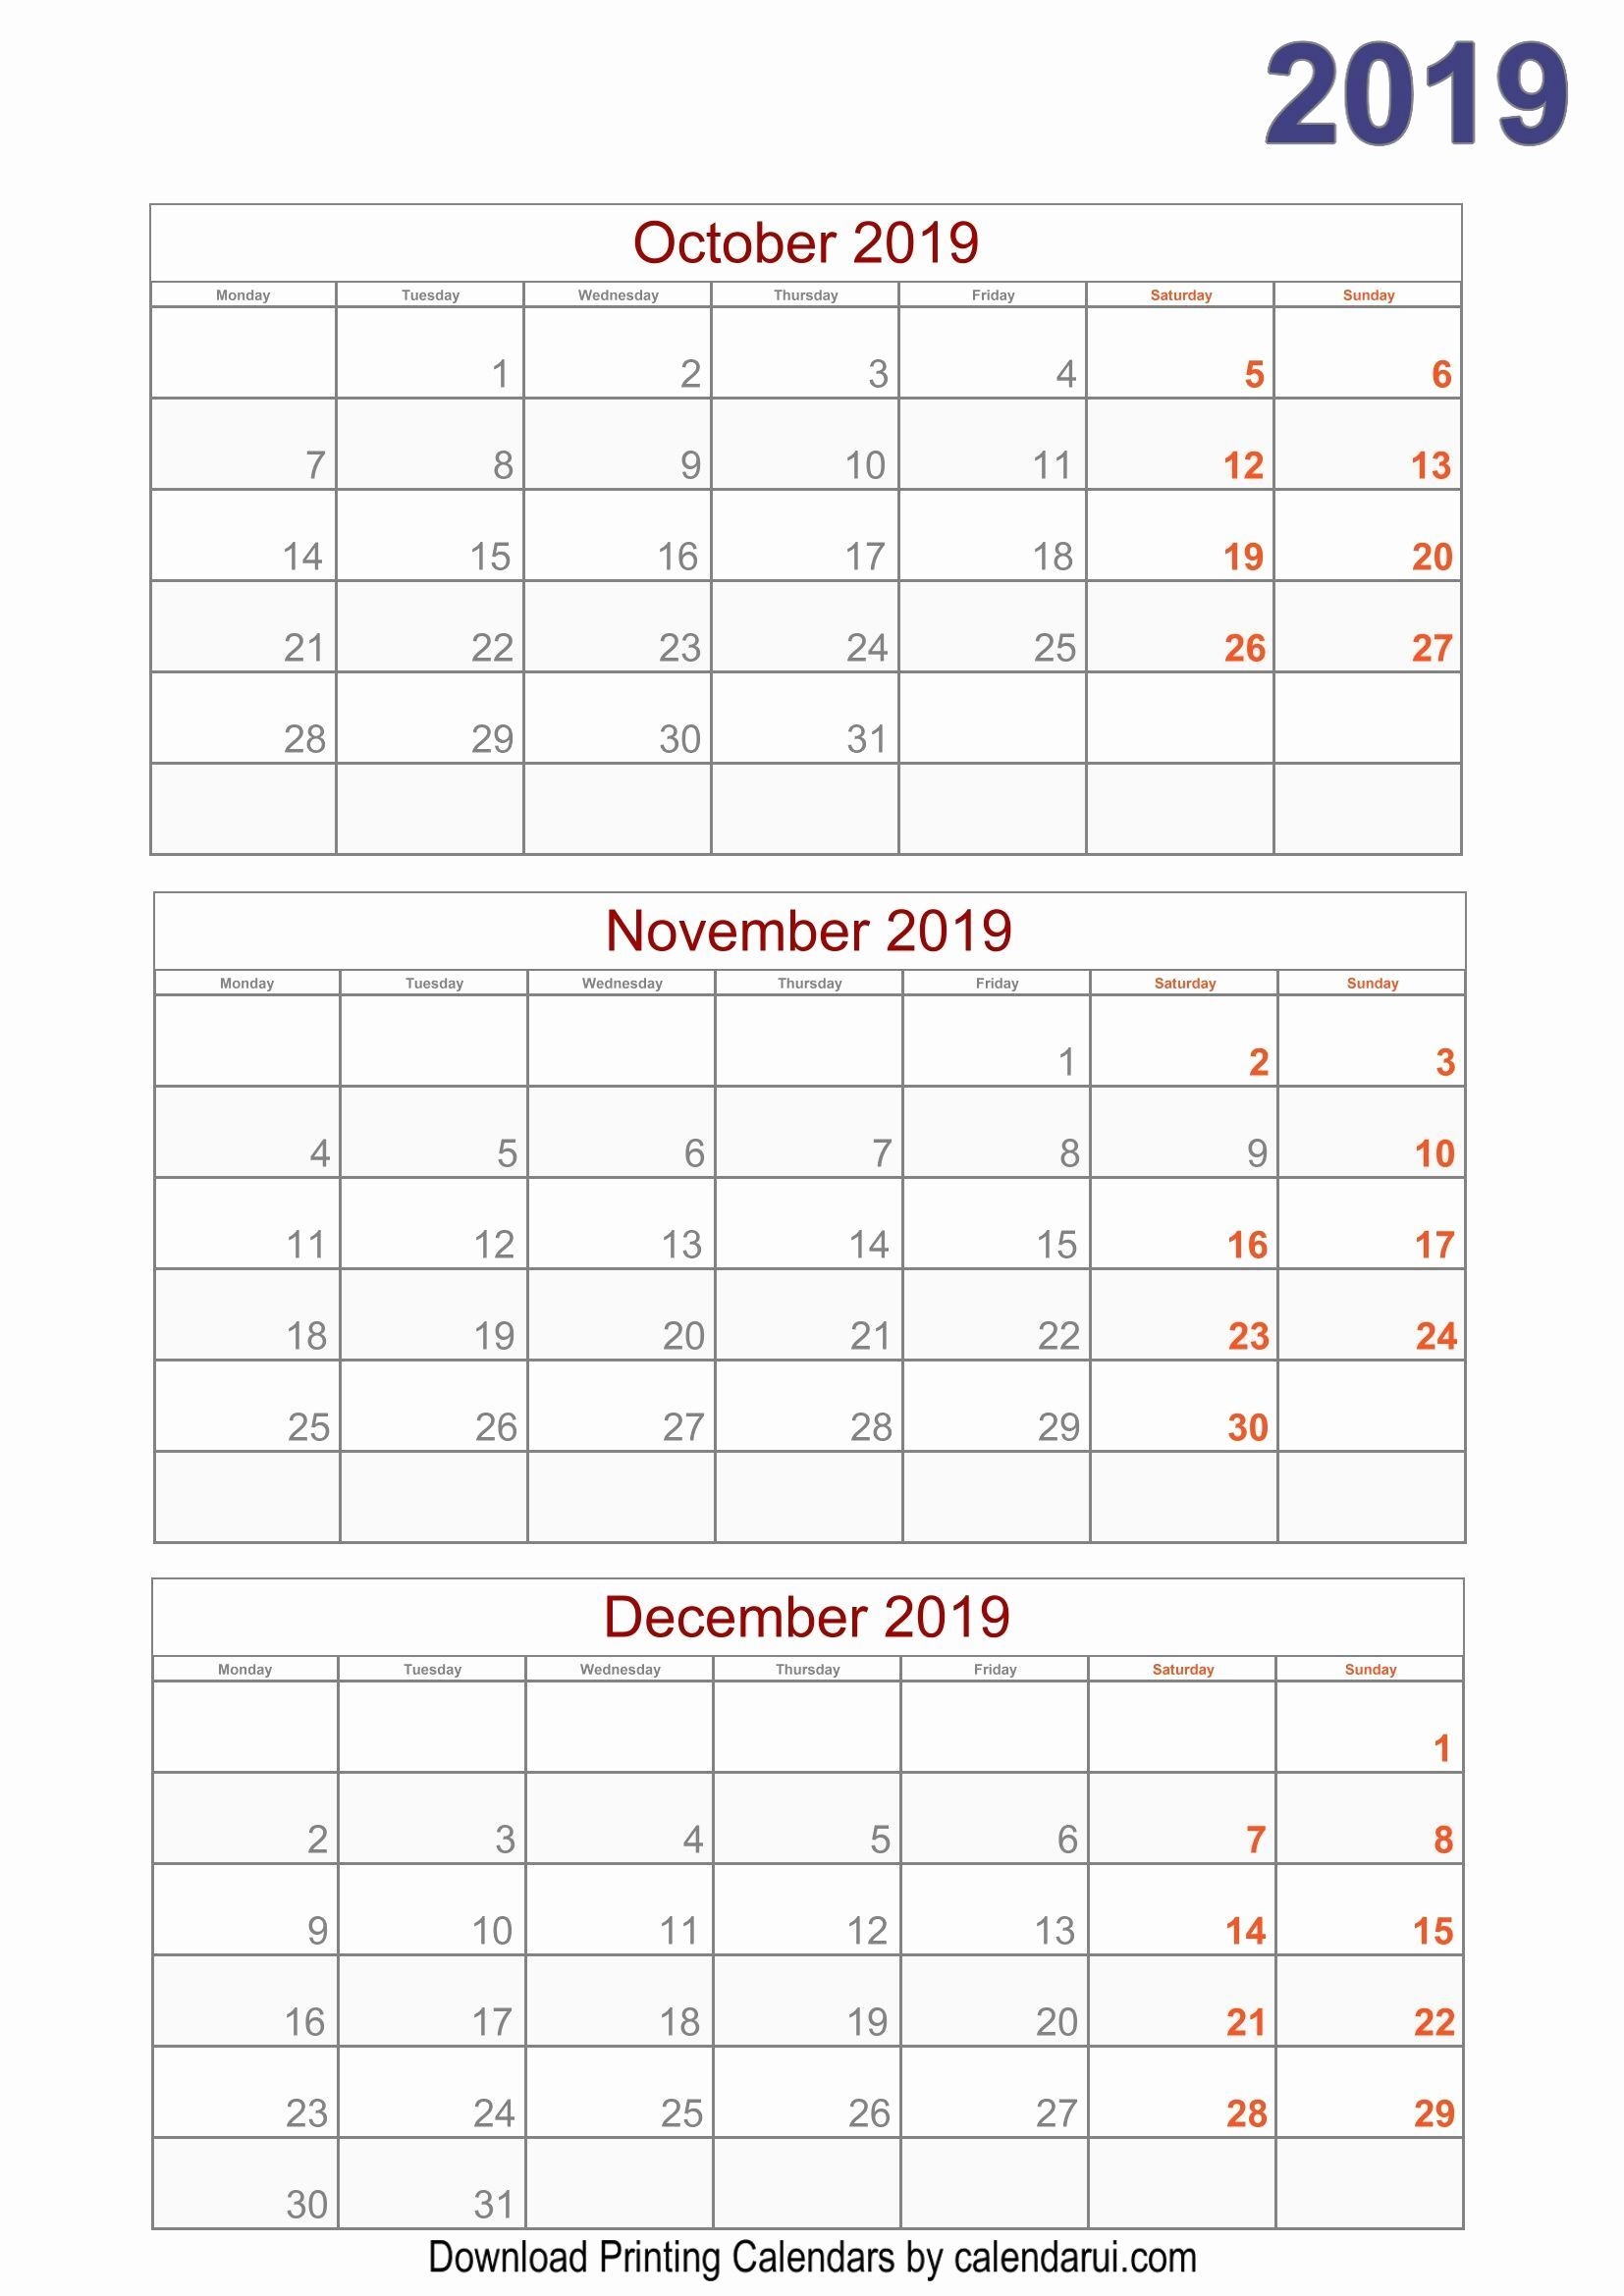 Printable Calendar I Can Type On In 2020 | Calendar